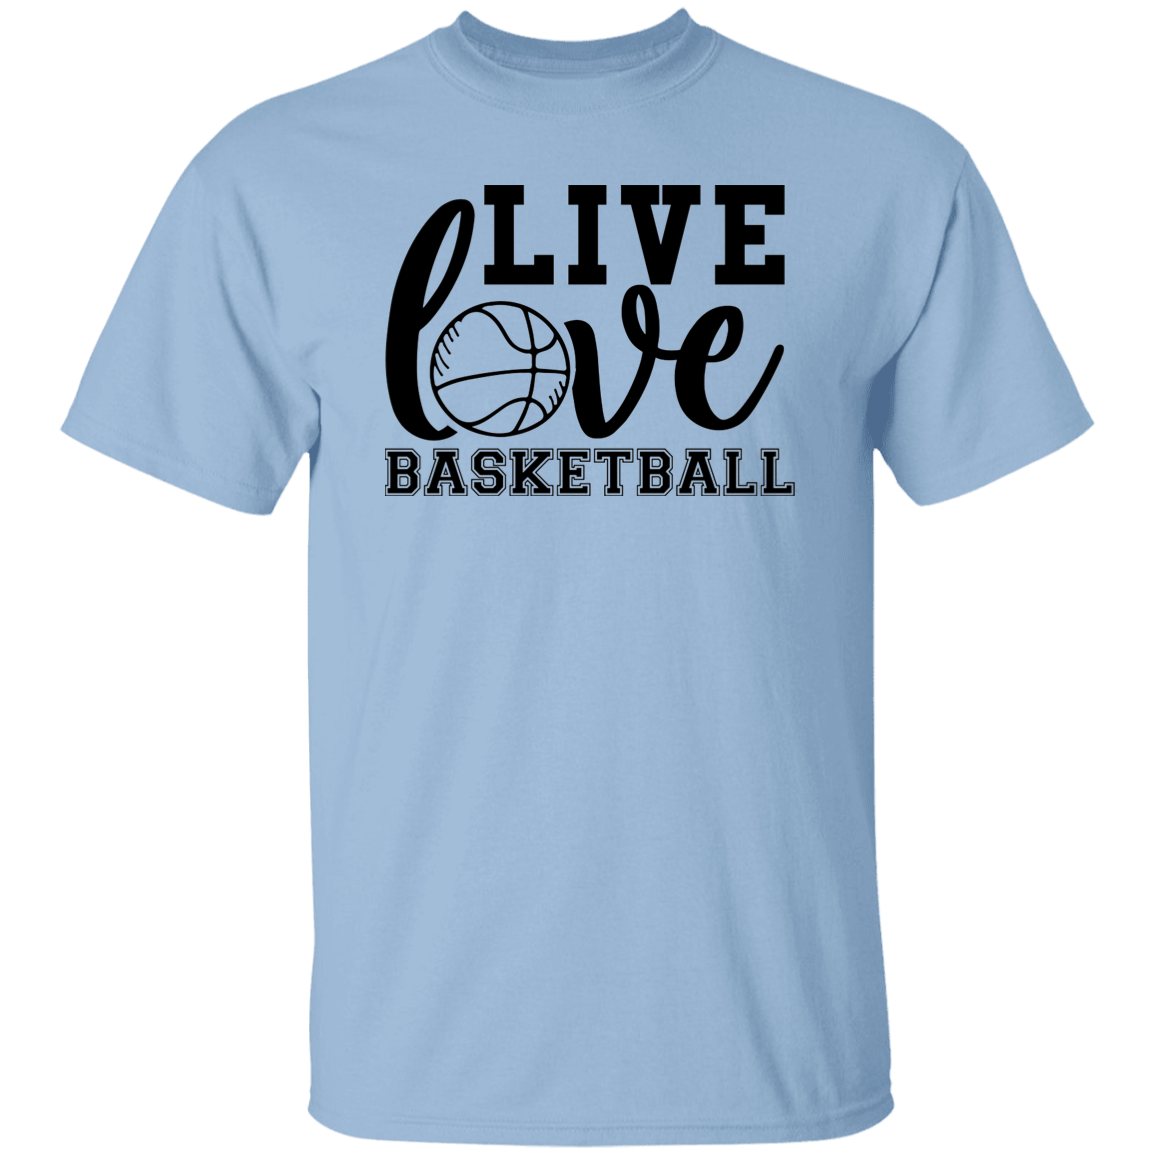 Live Love Basketball T-Shirt